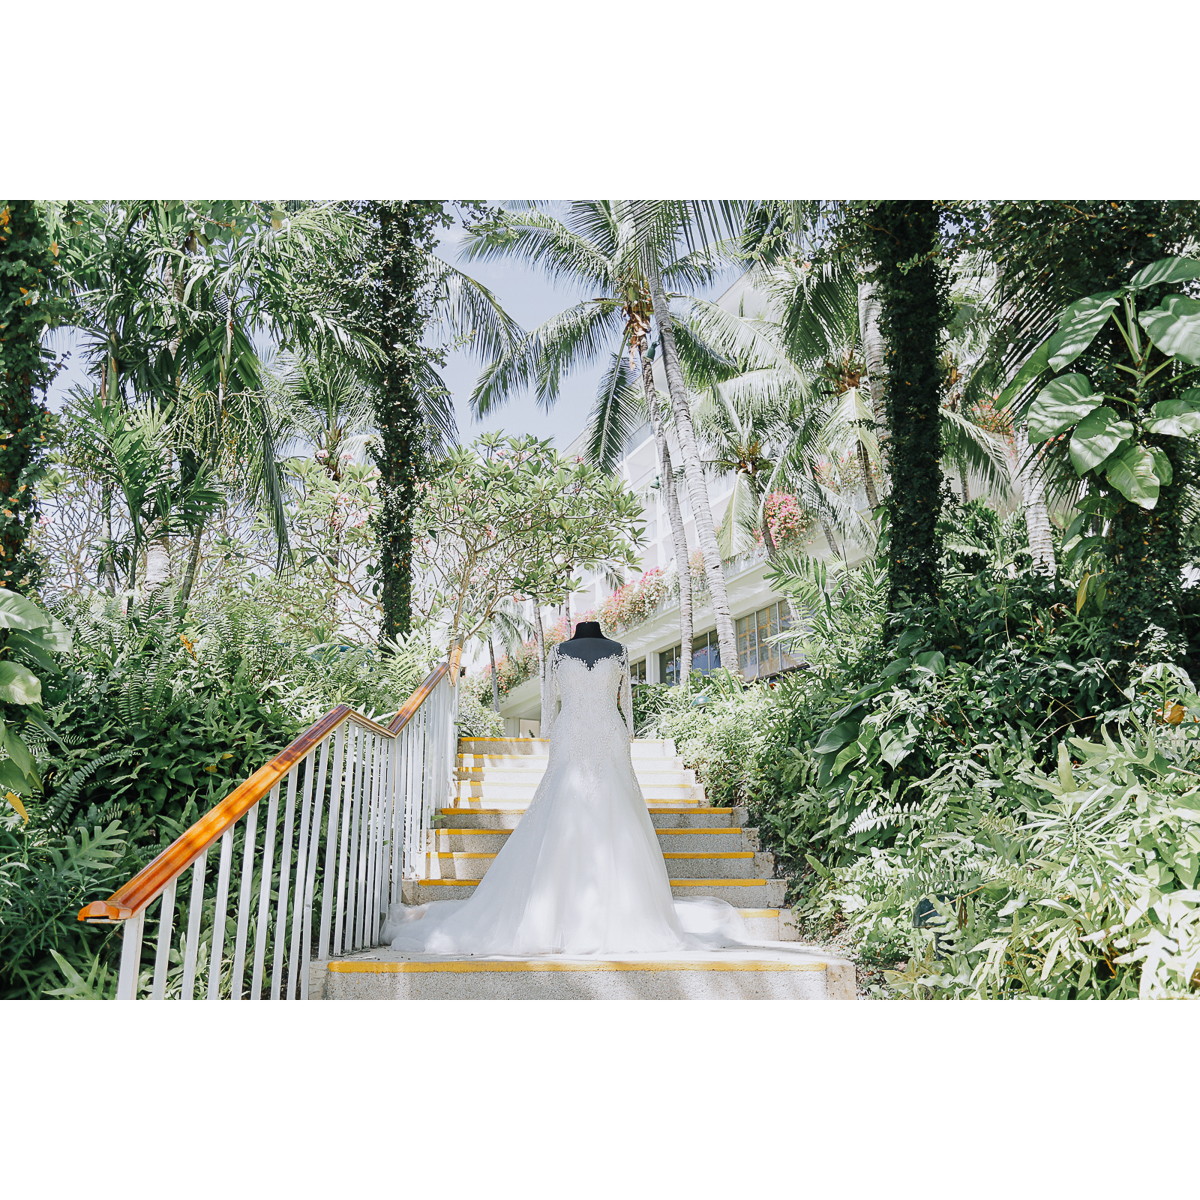 001 2 - Coleen & Seigfred's Shangrila Mactan Cebu Destination Wedding